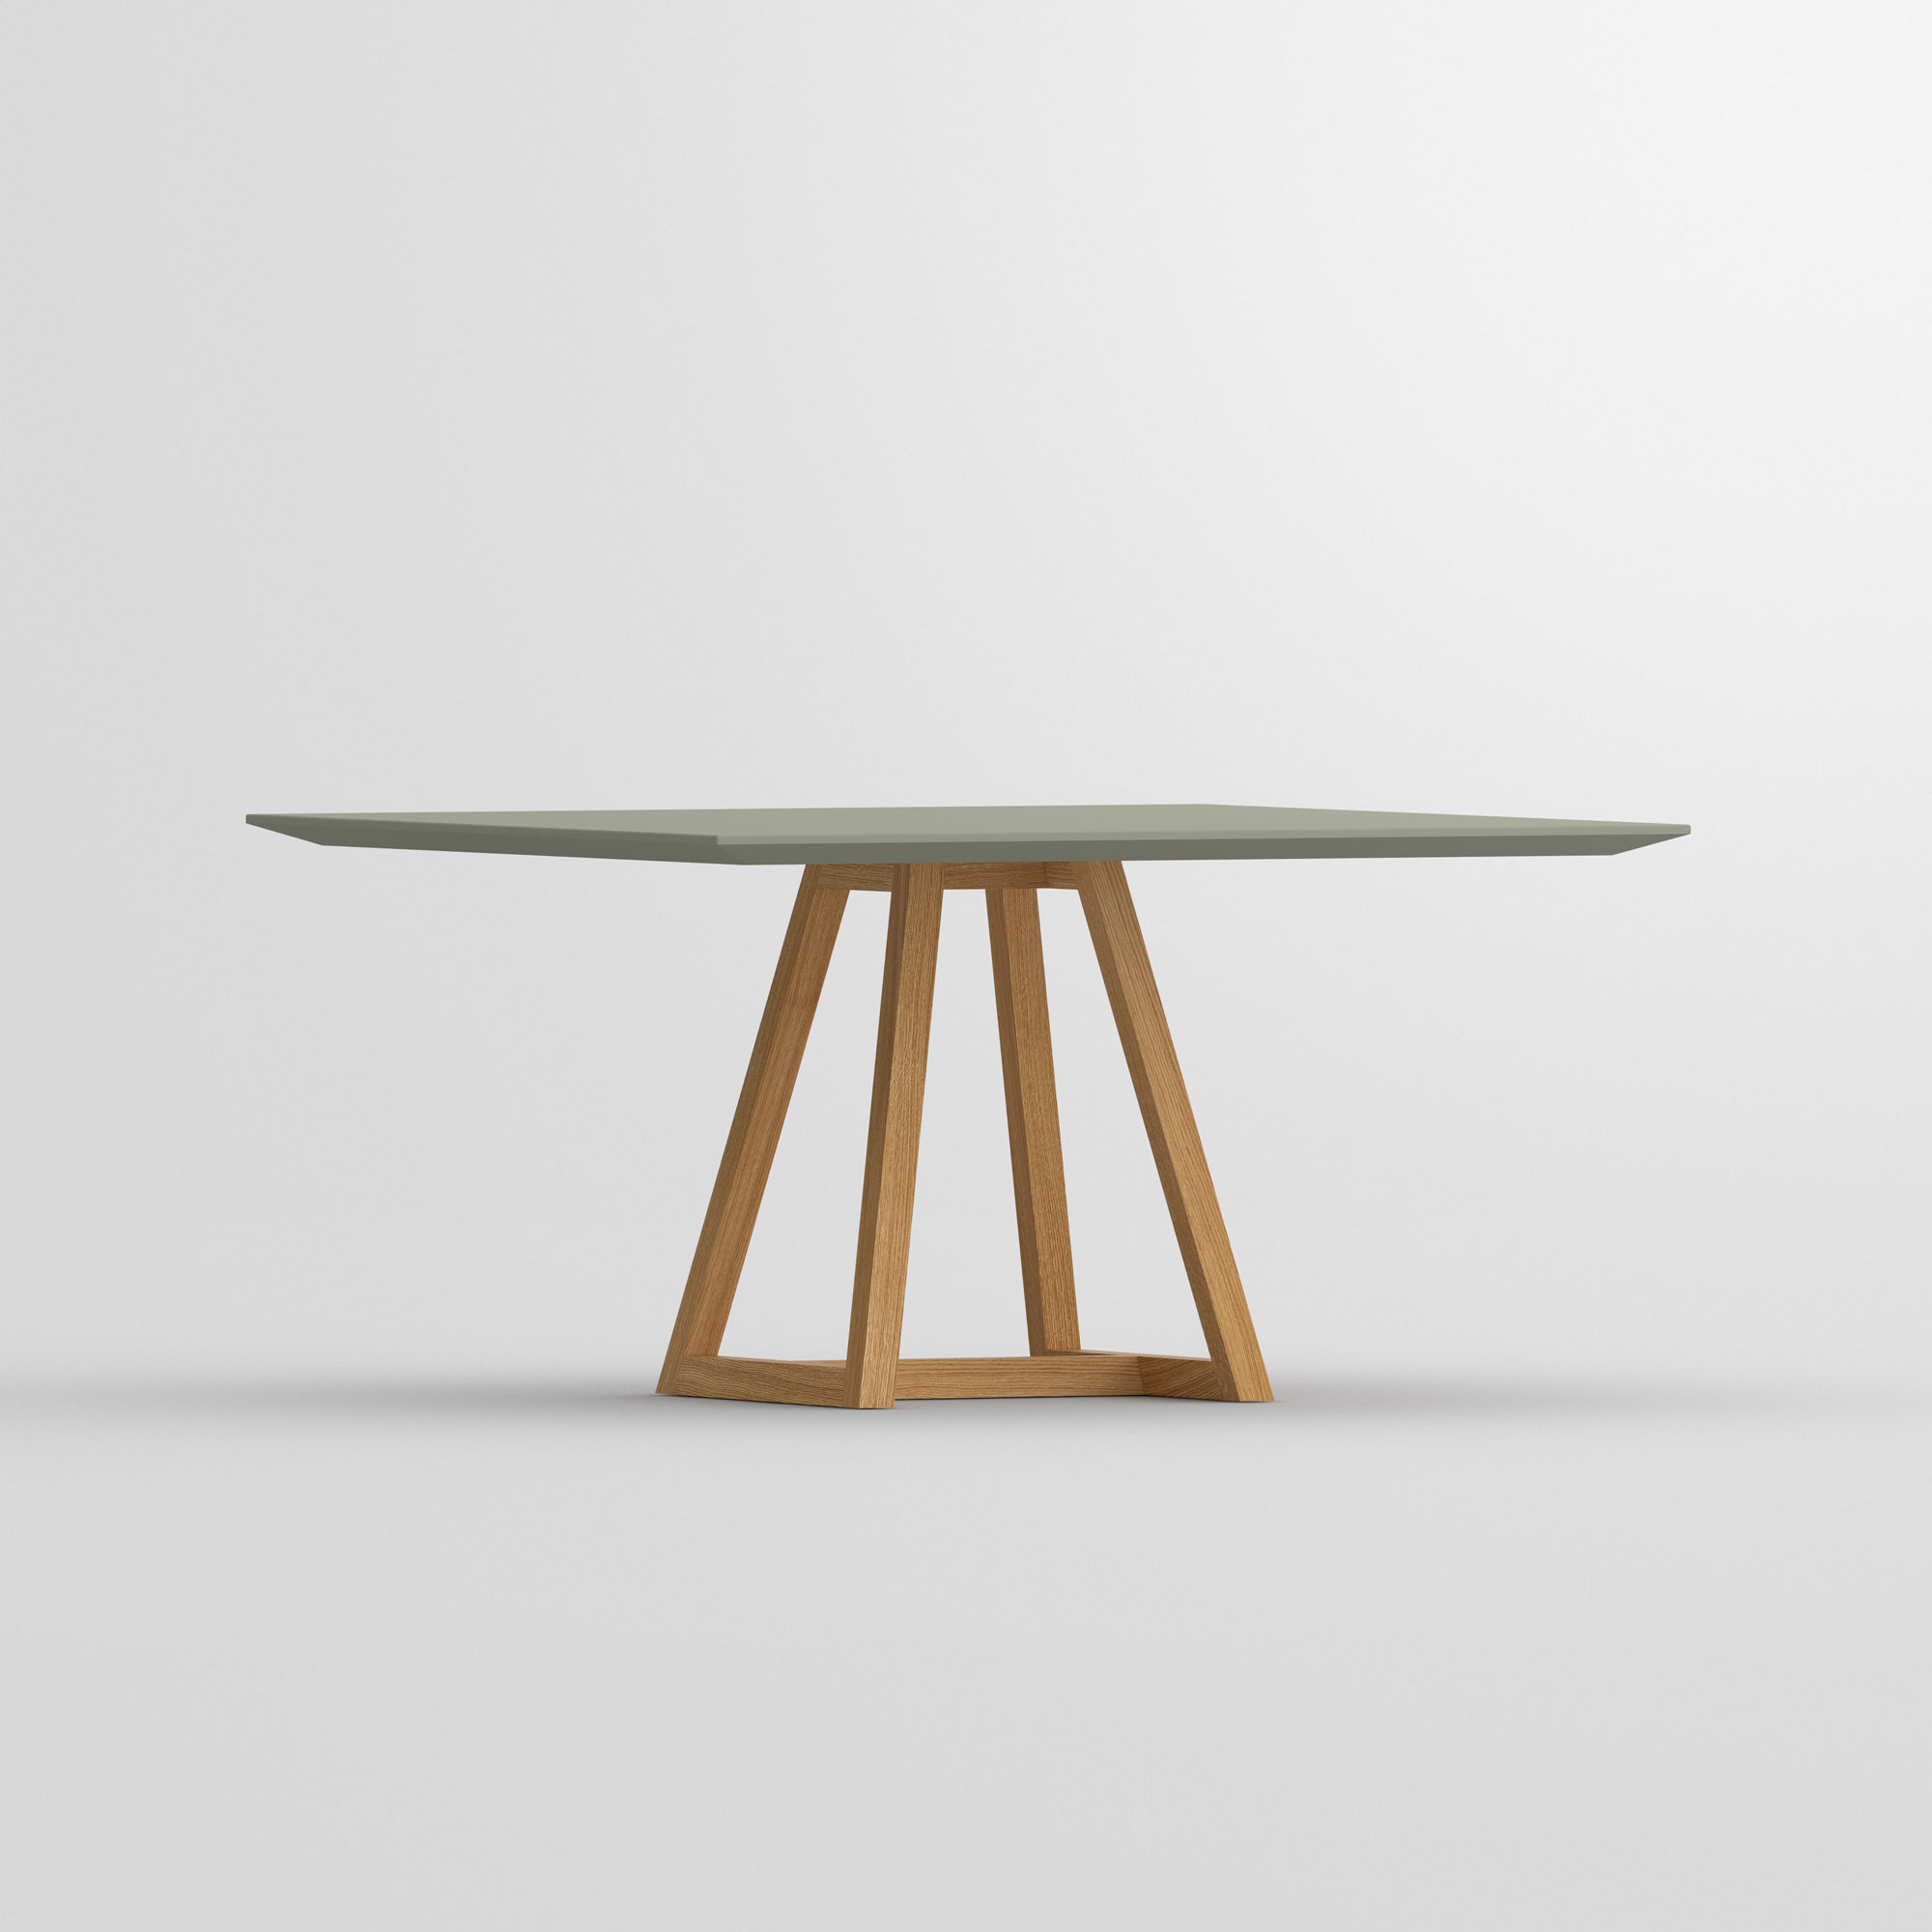 Linoleum table MARGO SQUARE LINO cam2 custom made in solid wood by vitamin design